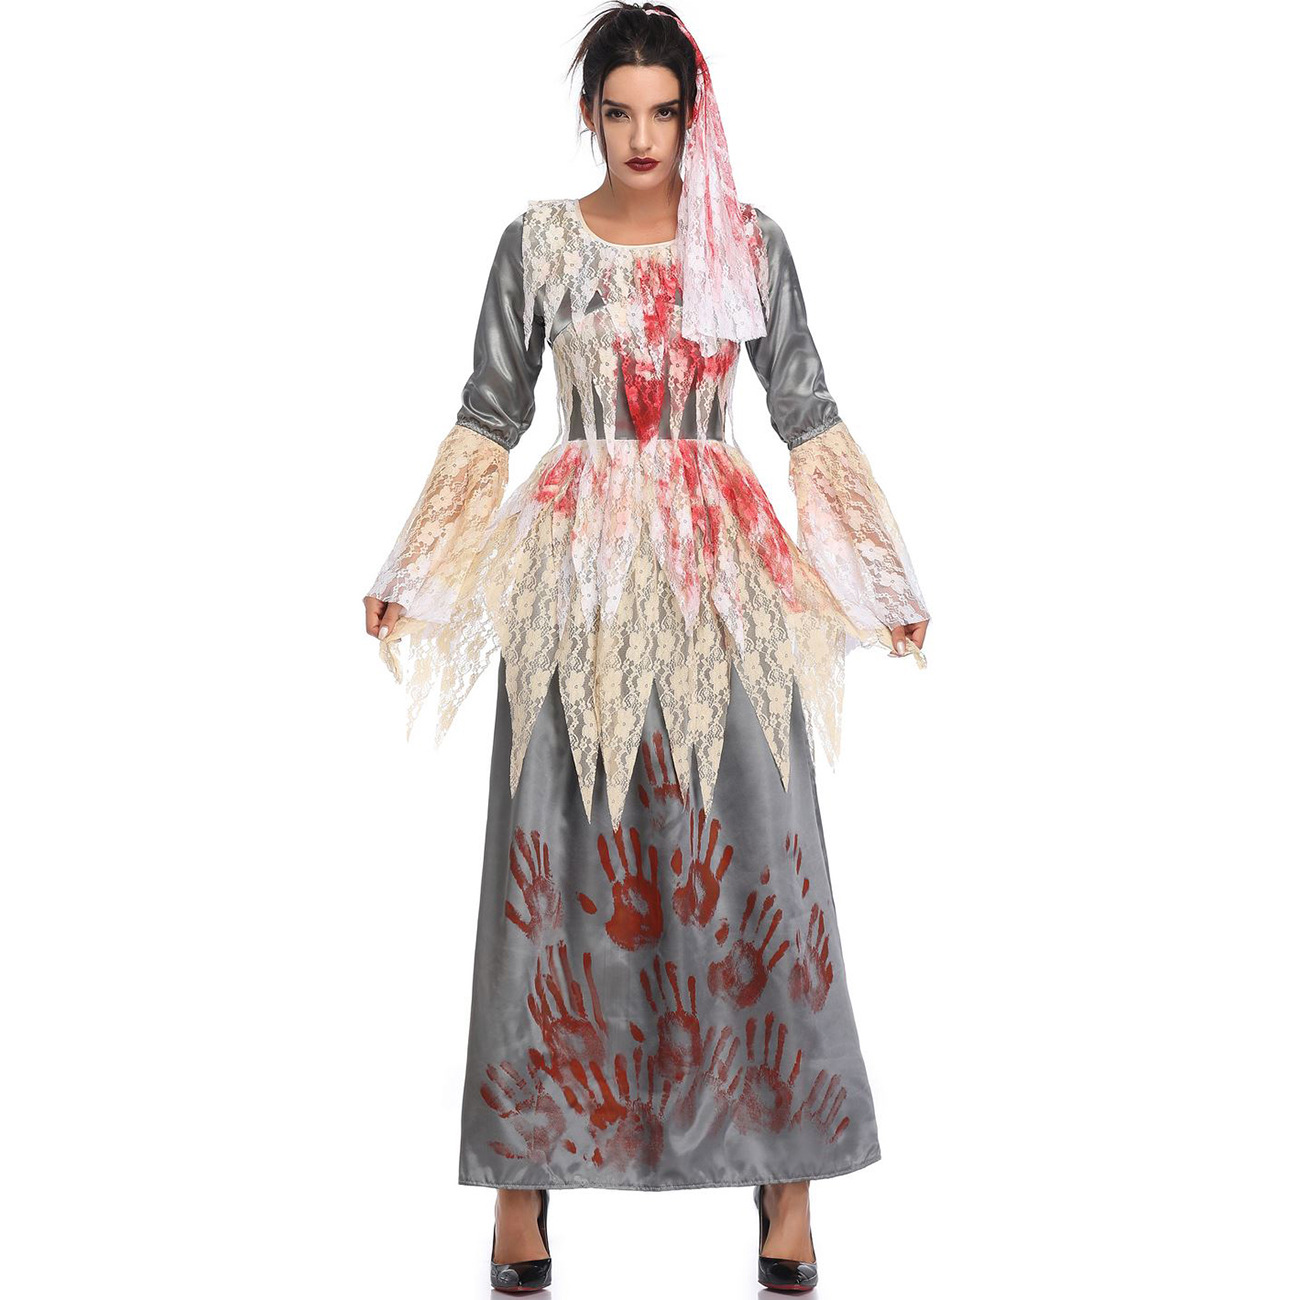 vampire ghost bride dress cosplay costume nihaostyles wholesale halloween costumes NSMRP79214